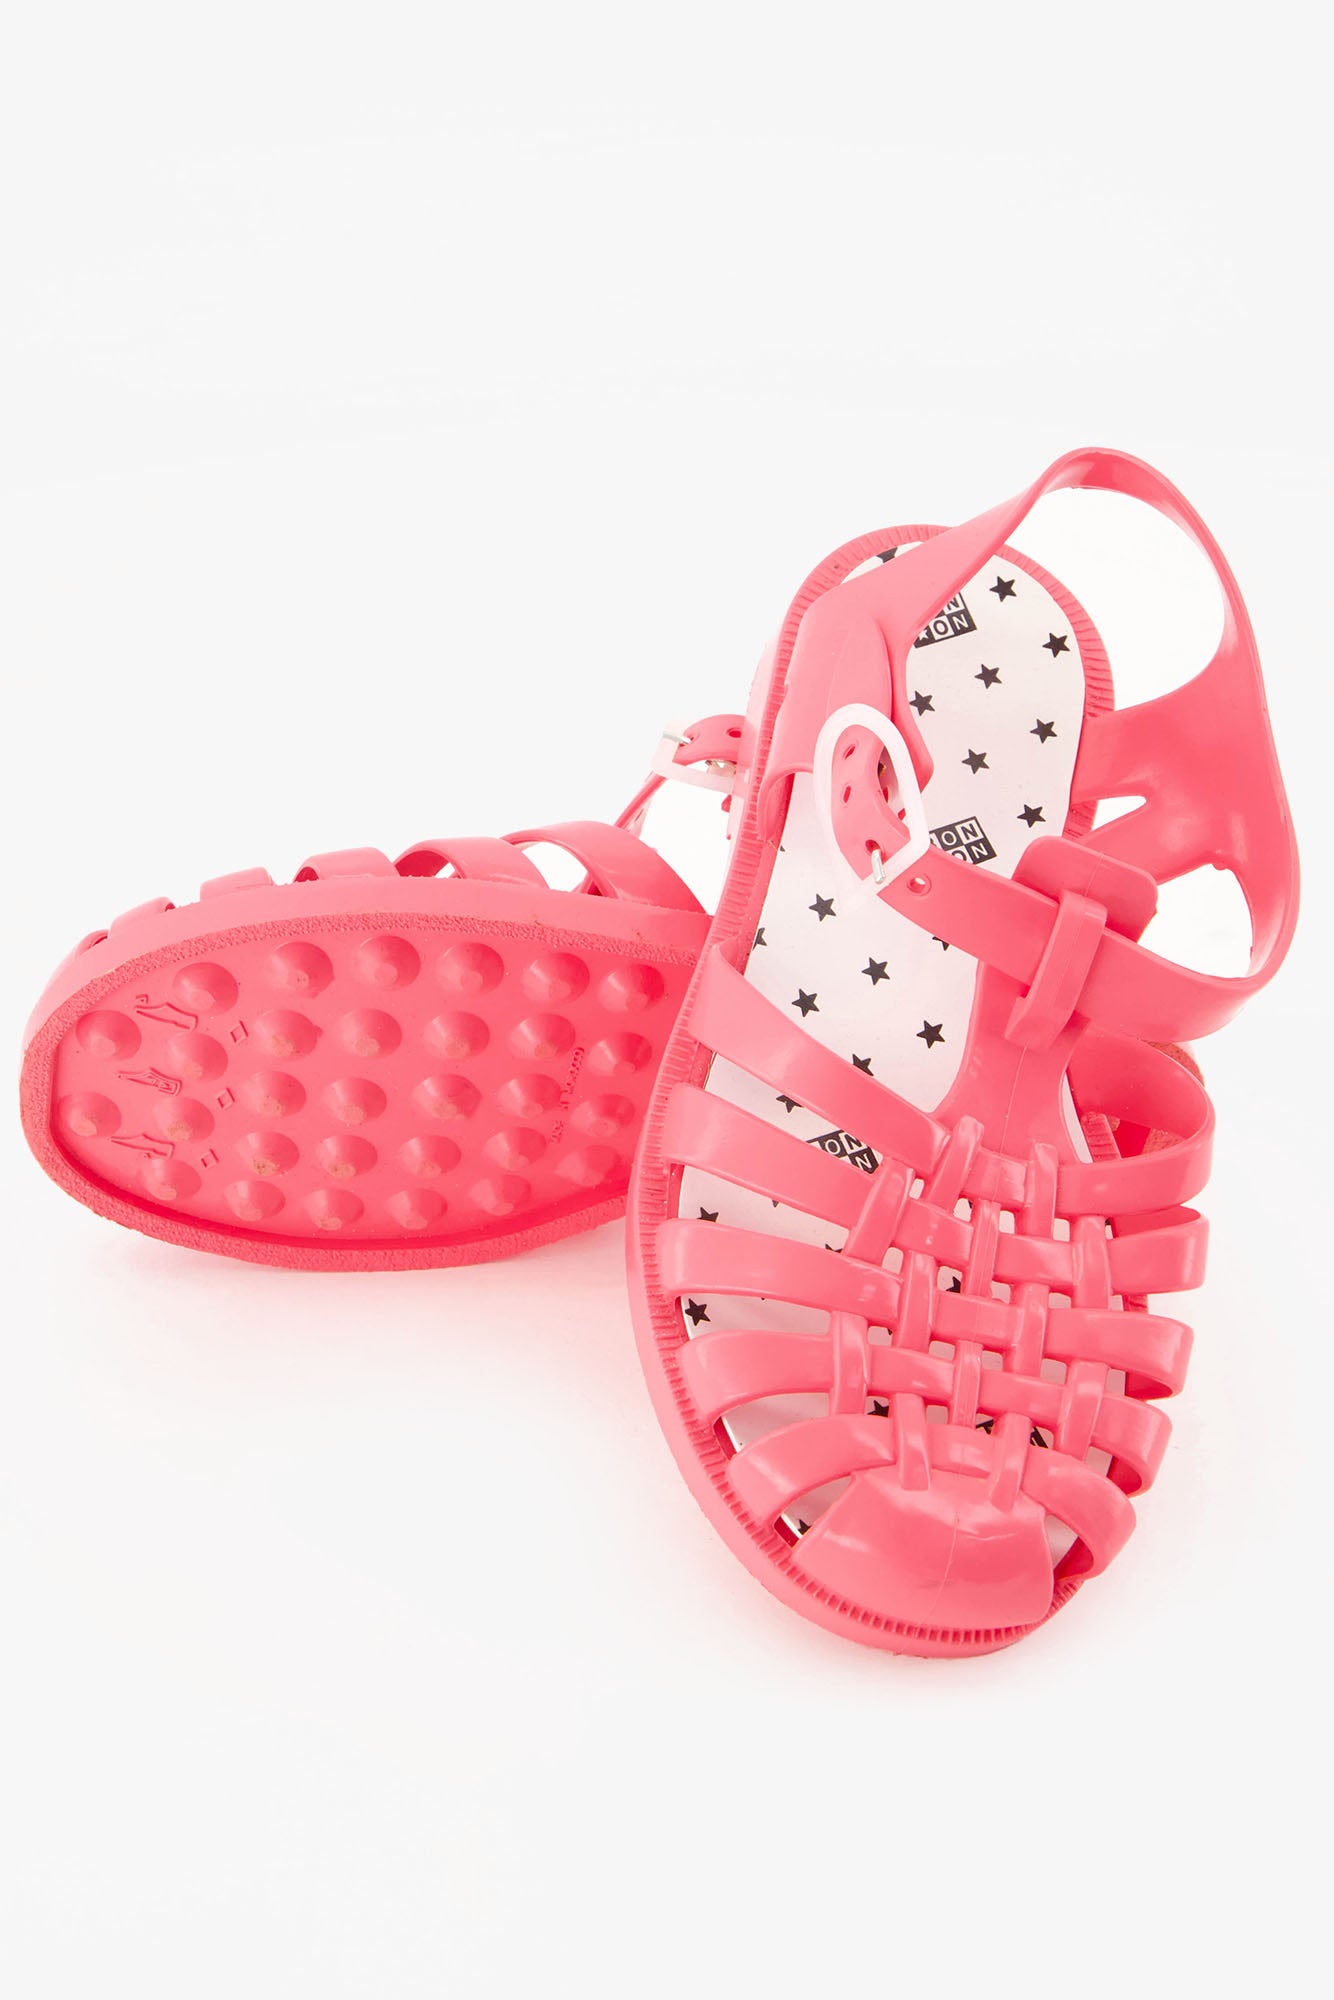 Sandals - PVC pink jellyfish